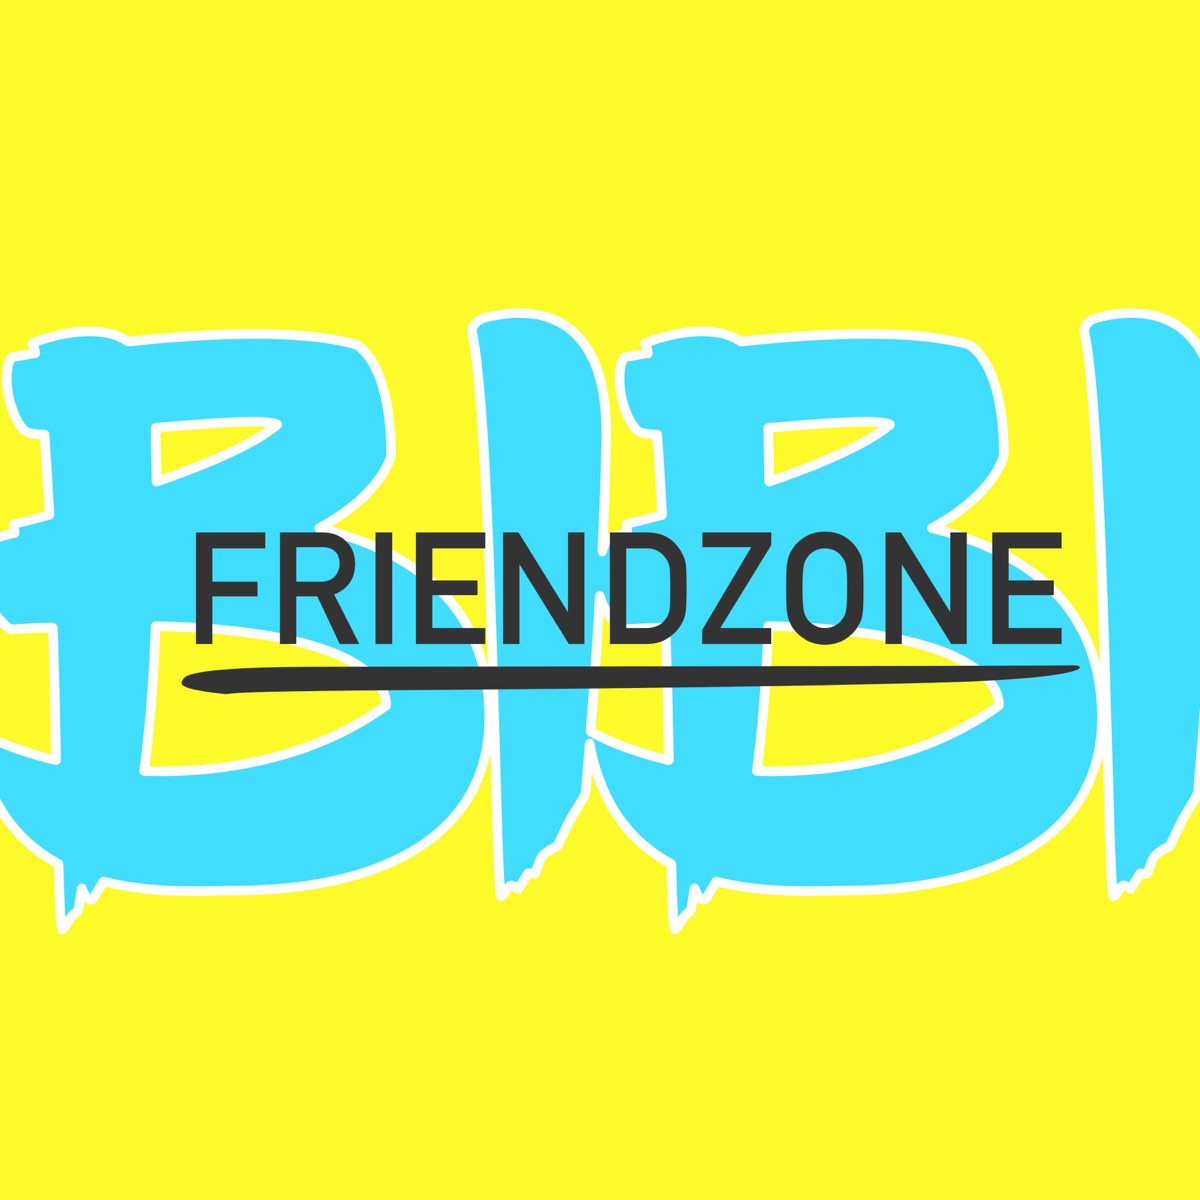 Bi bi bi музыку. Bibi альбом. Friends Zone песня.